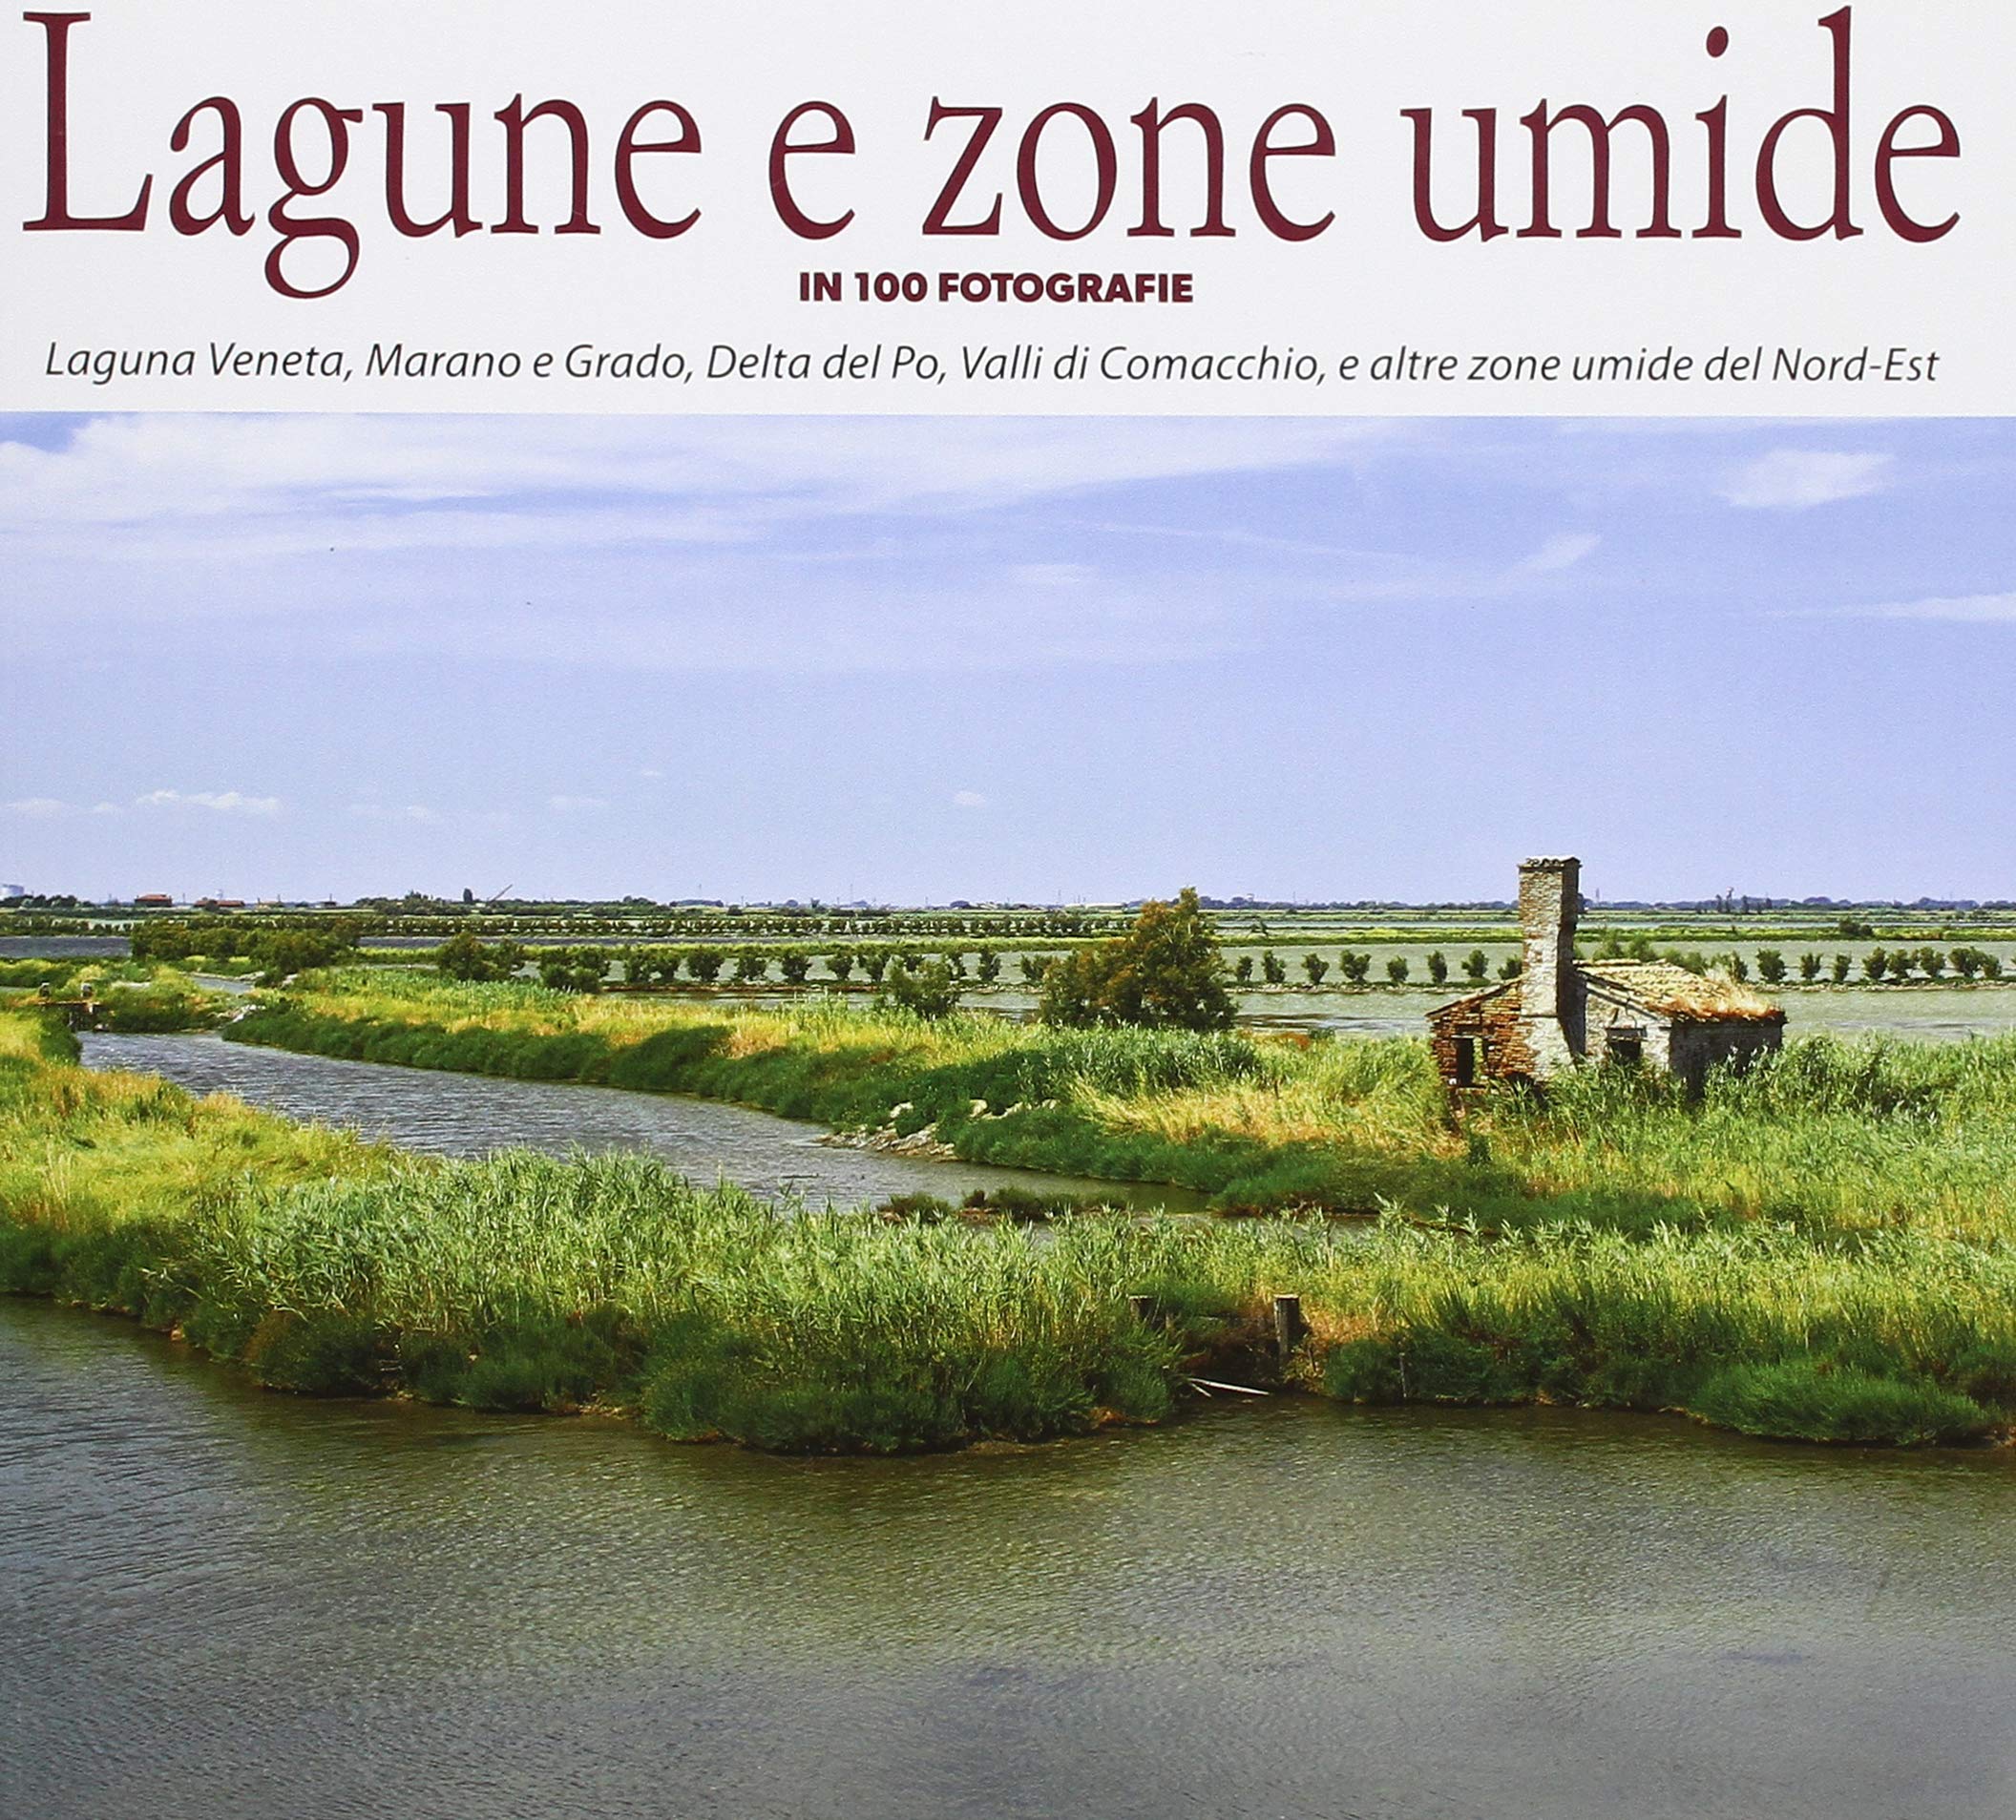 Lagune e zone umide in 100 fotografie